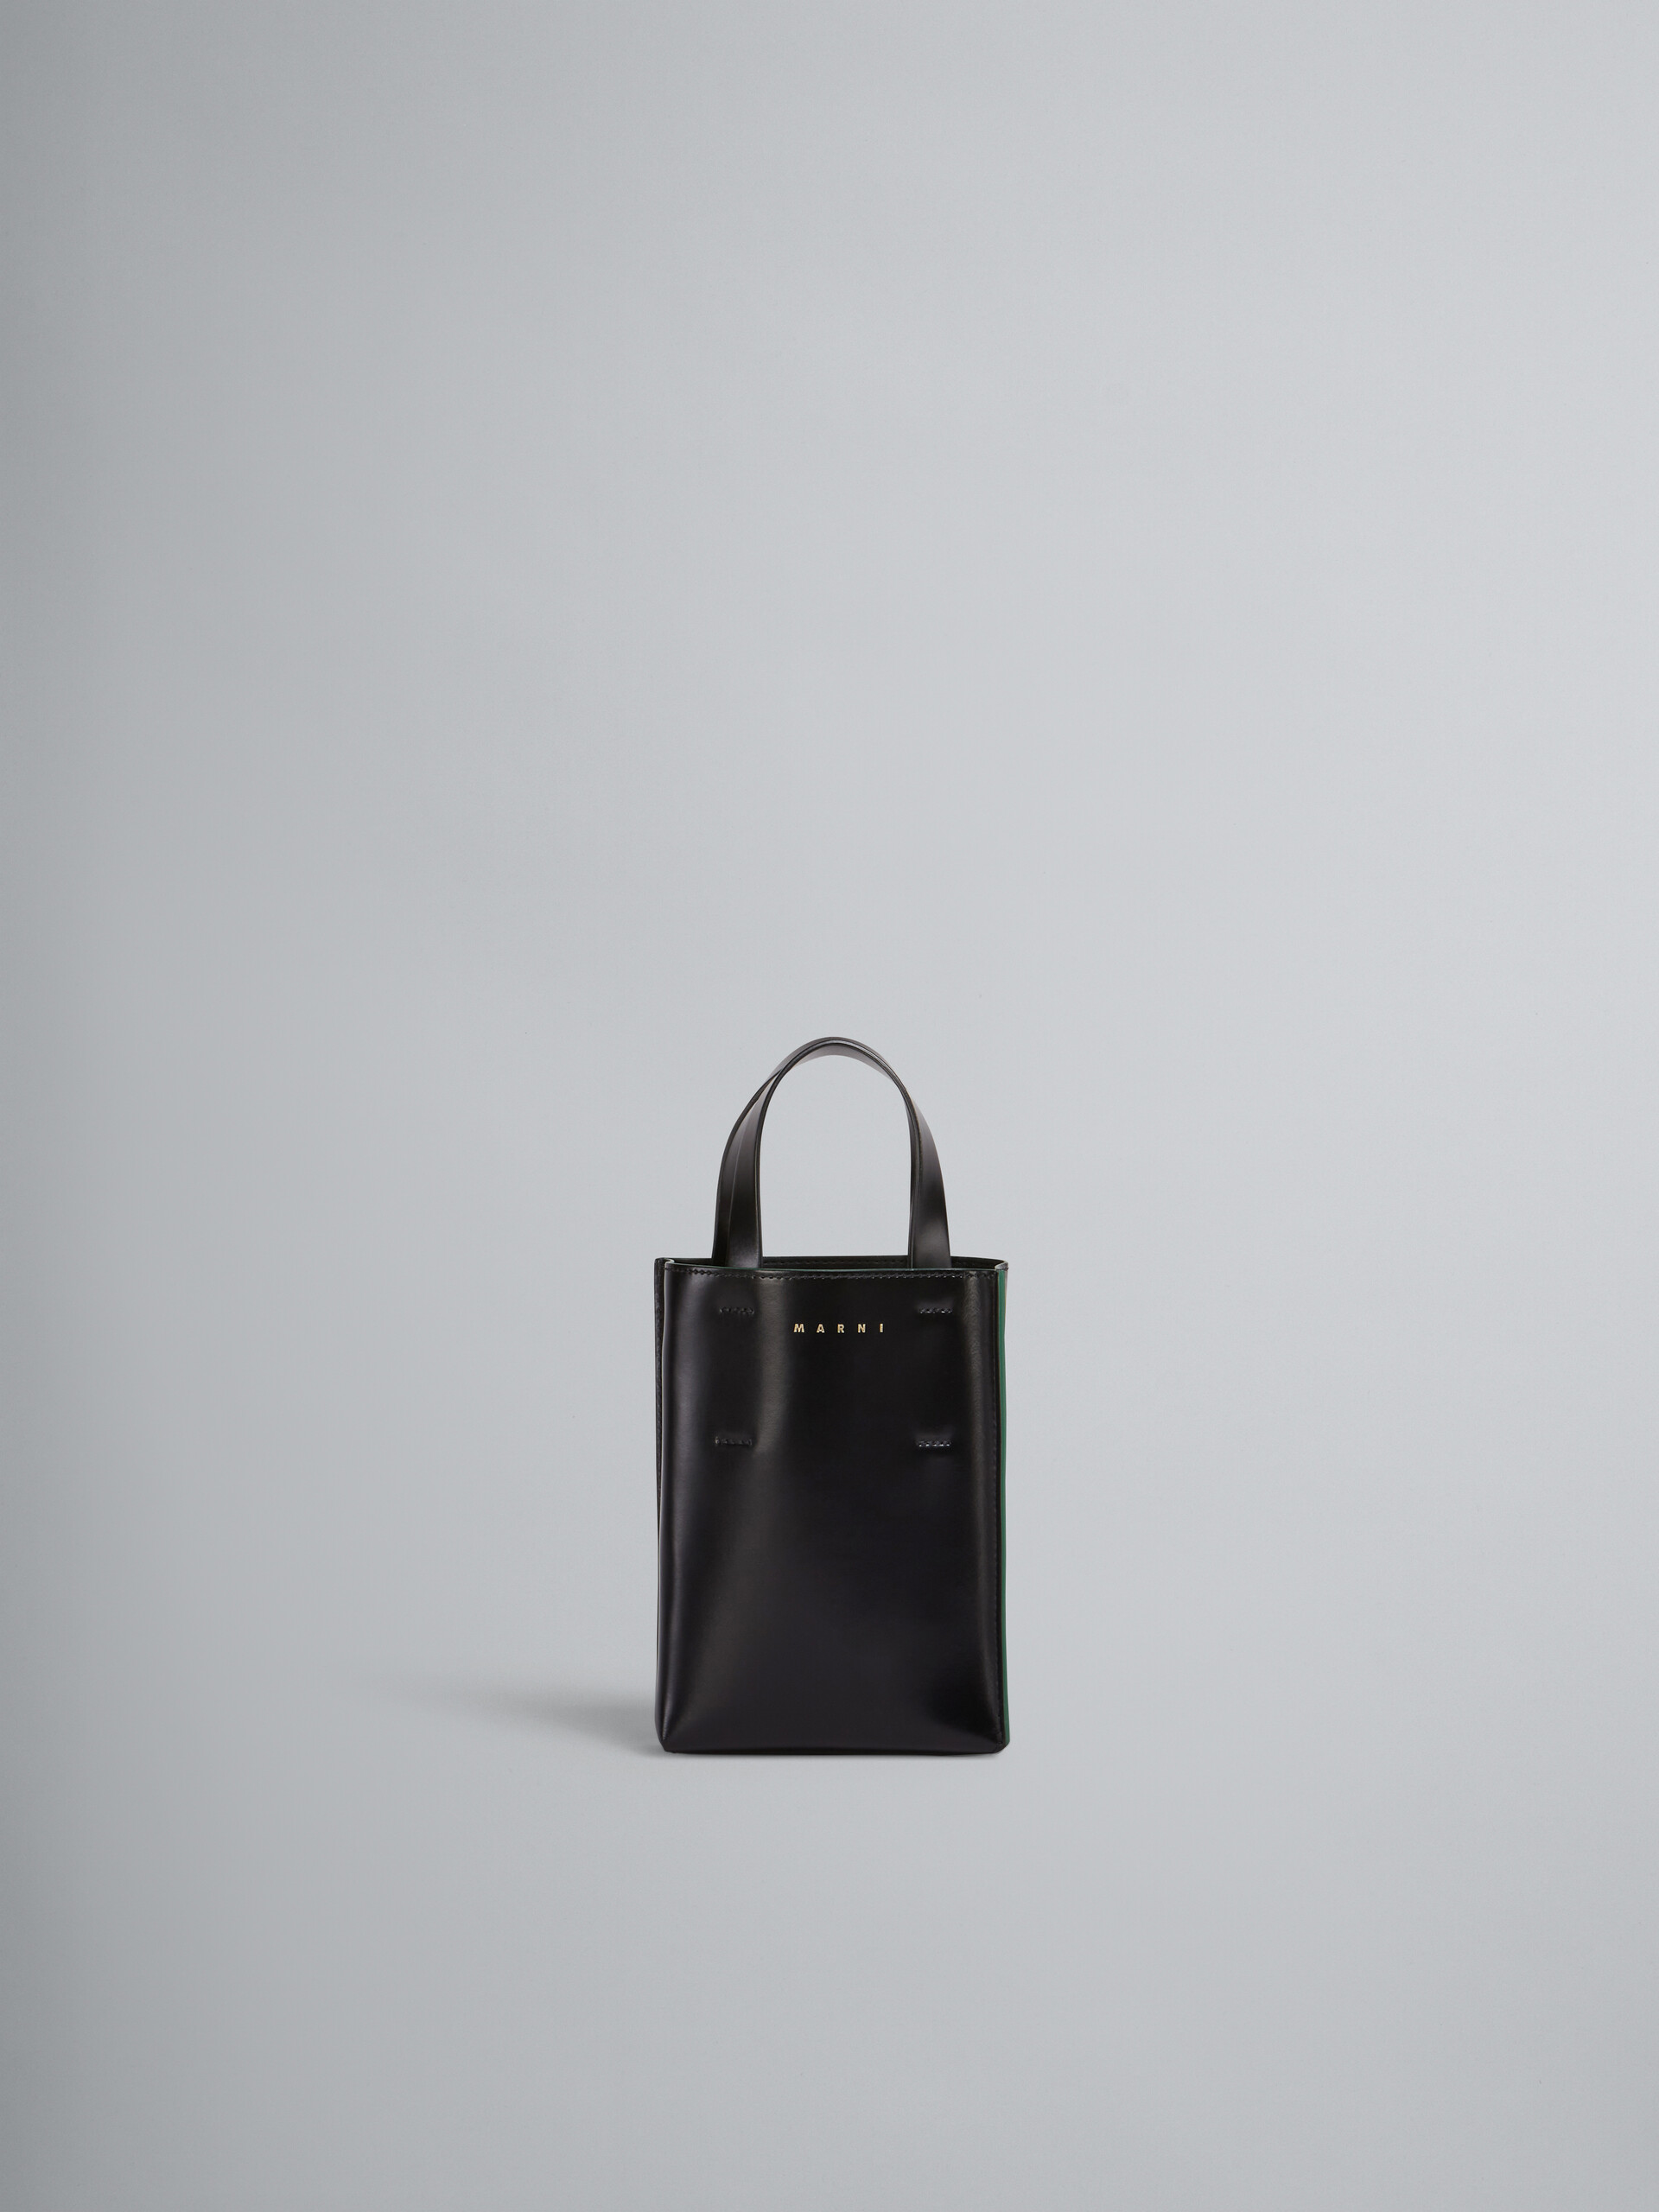 Marni Museo leather tote bag - Black